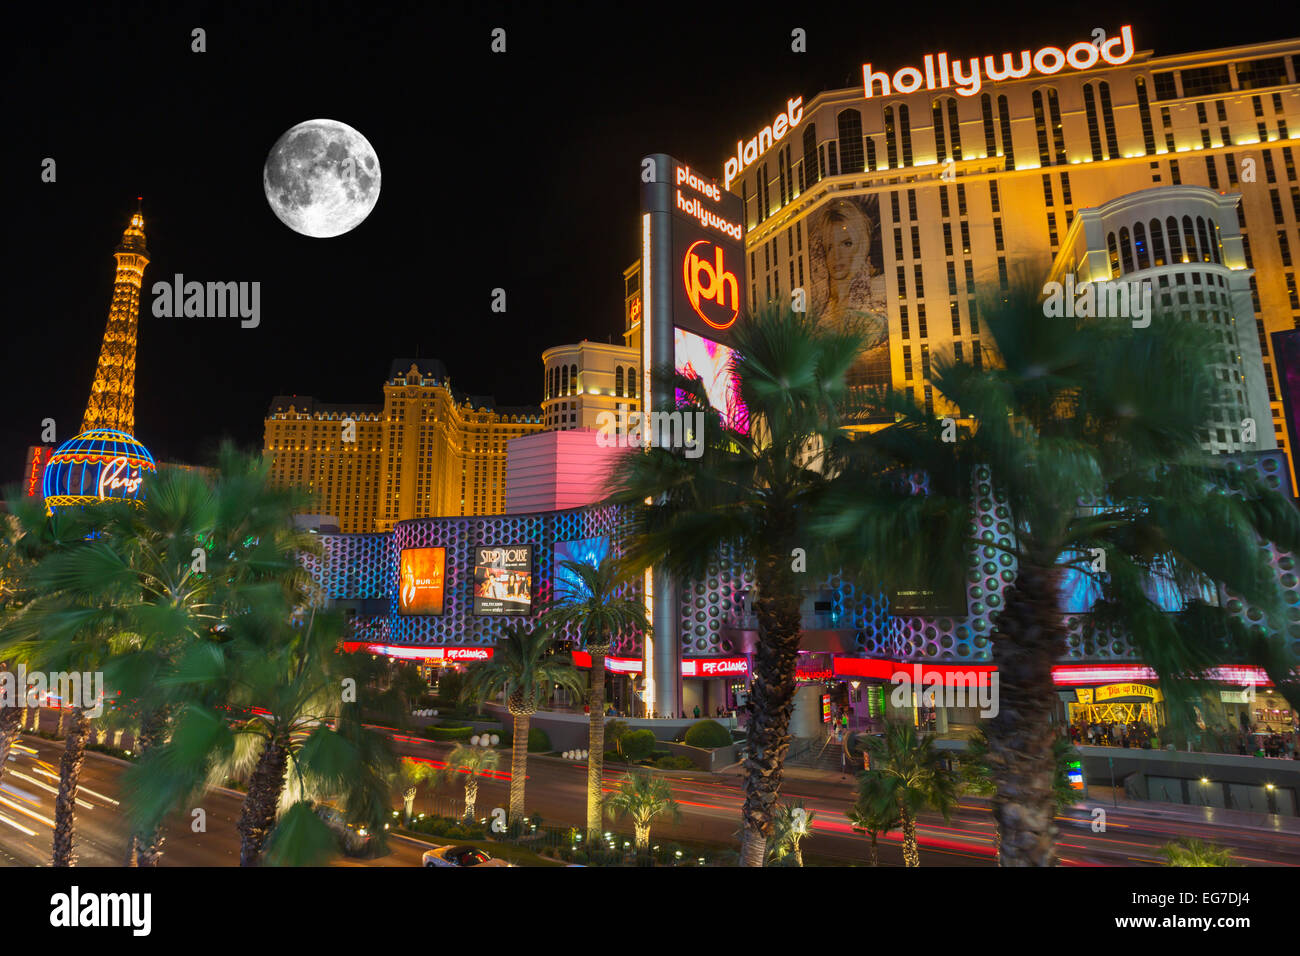 Eiffel Tower of Paris Hotel in Las Vegas Editorial Stock Image - Image of  luxury, casino: 22069414